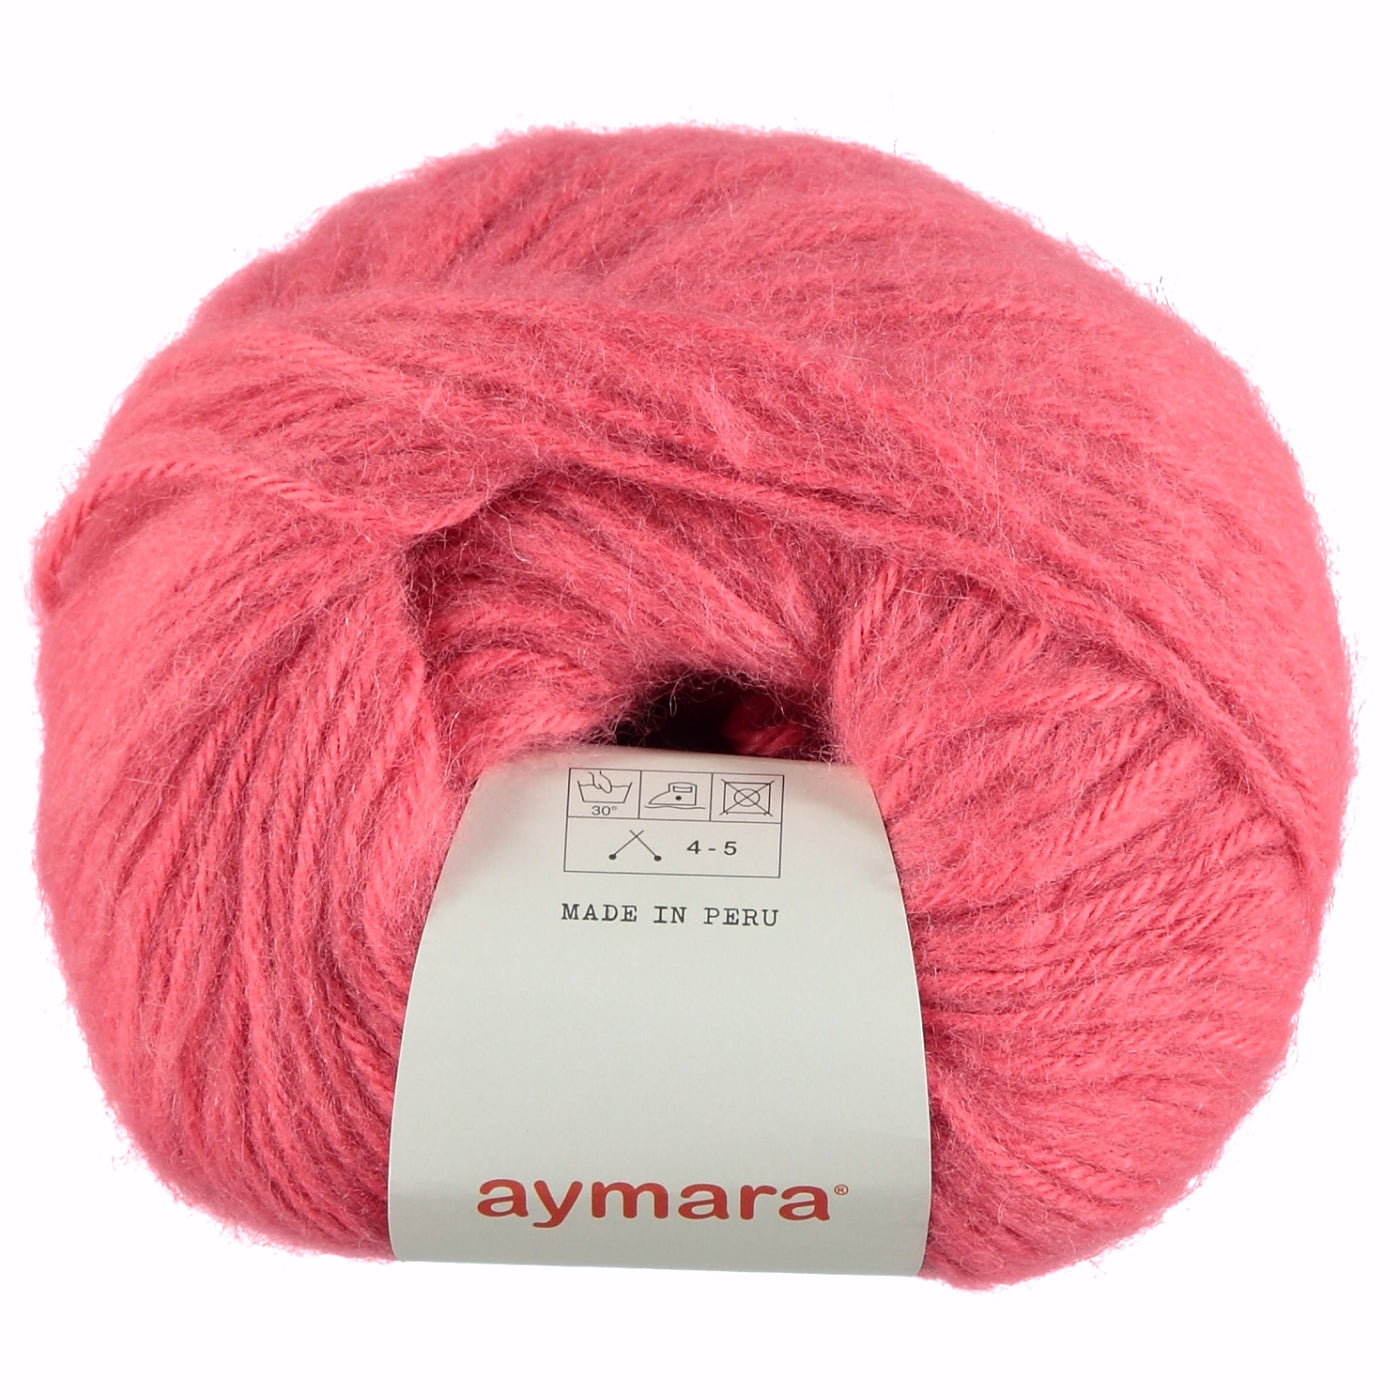 Soft baby alpaca yarn glossy pink - 500g (10 balls)